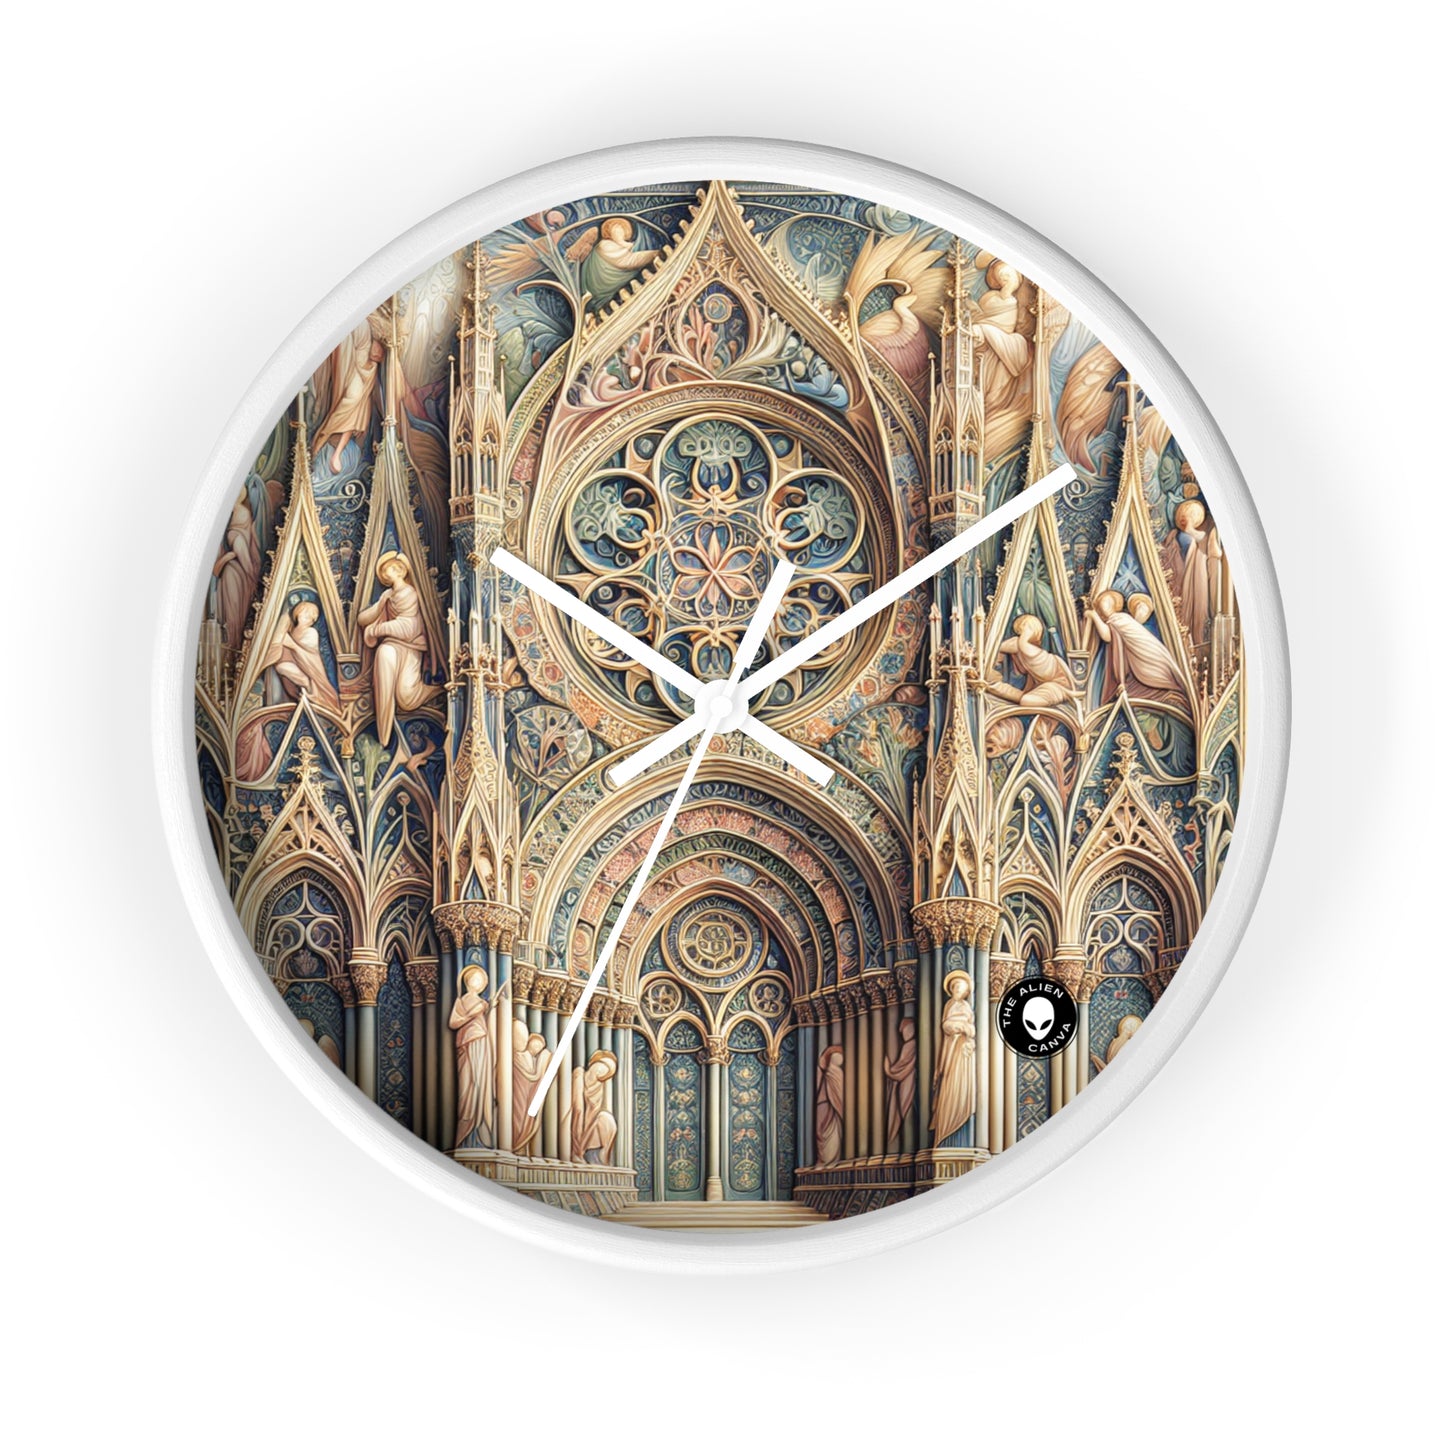 "Harmony of Angels: Celestial Serenade at Dusk" - The Alien Wall Clock International Gothic